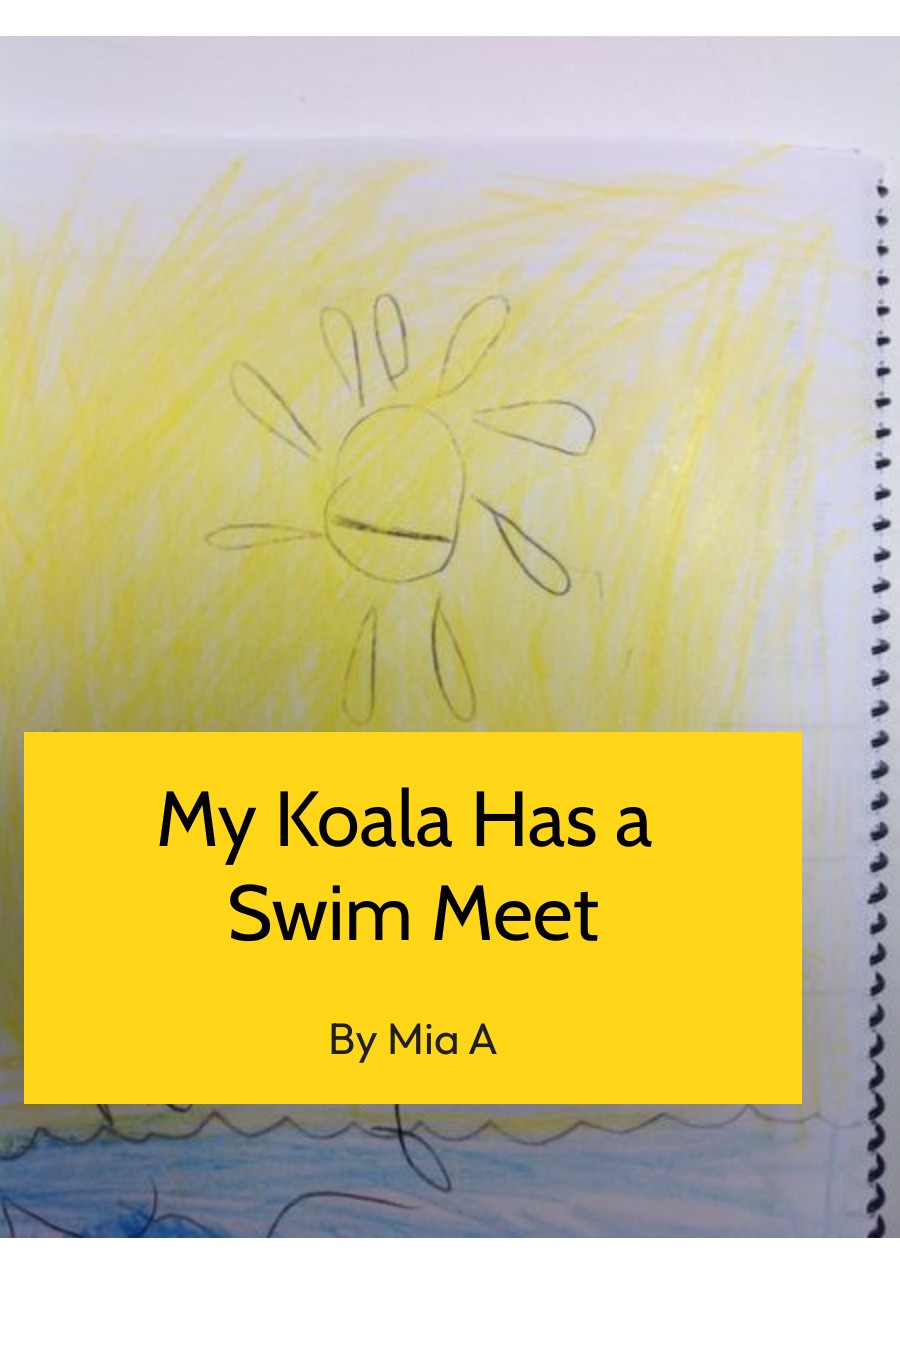 My Koala has a Swim Meet by Mia A